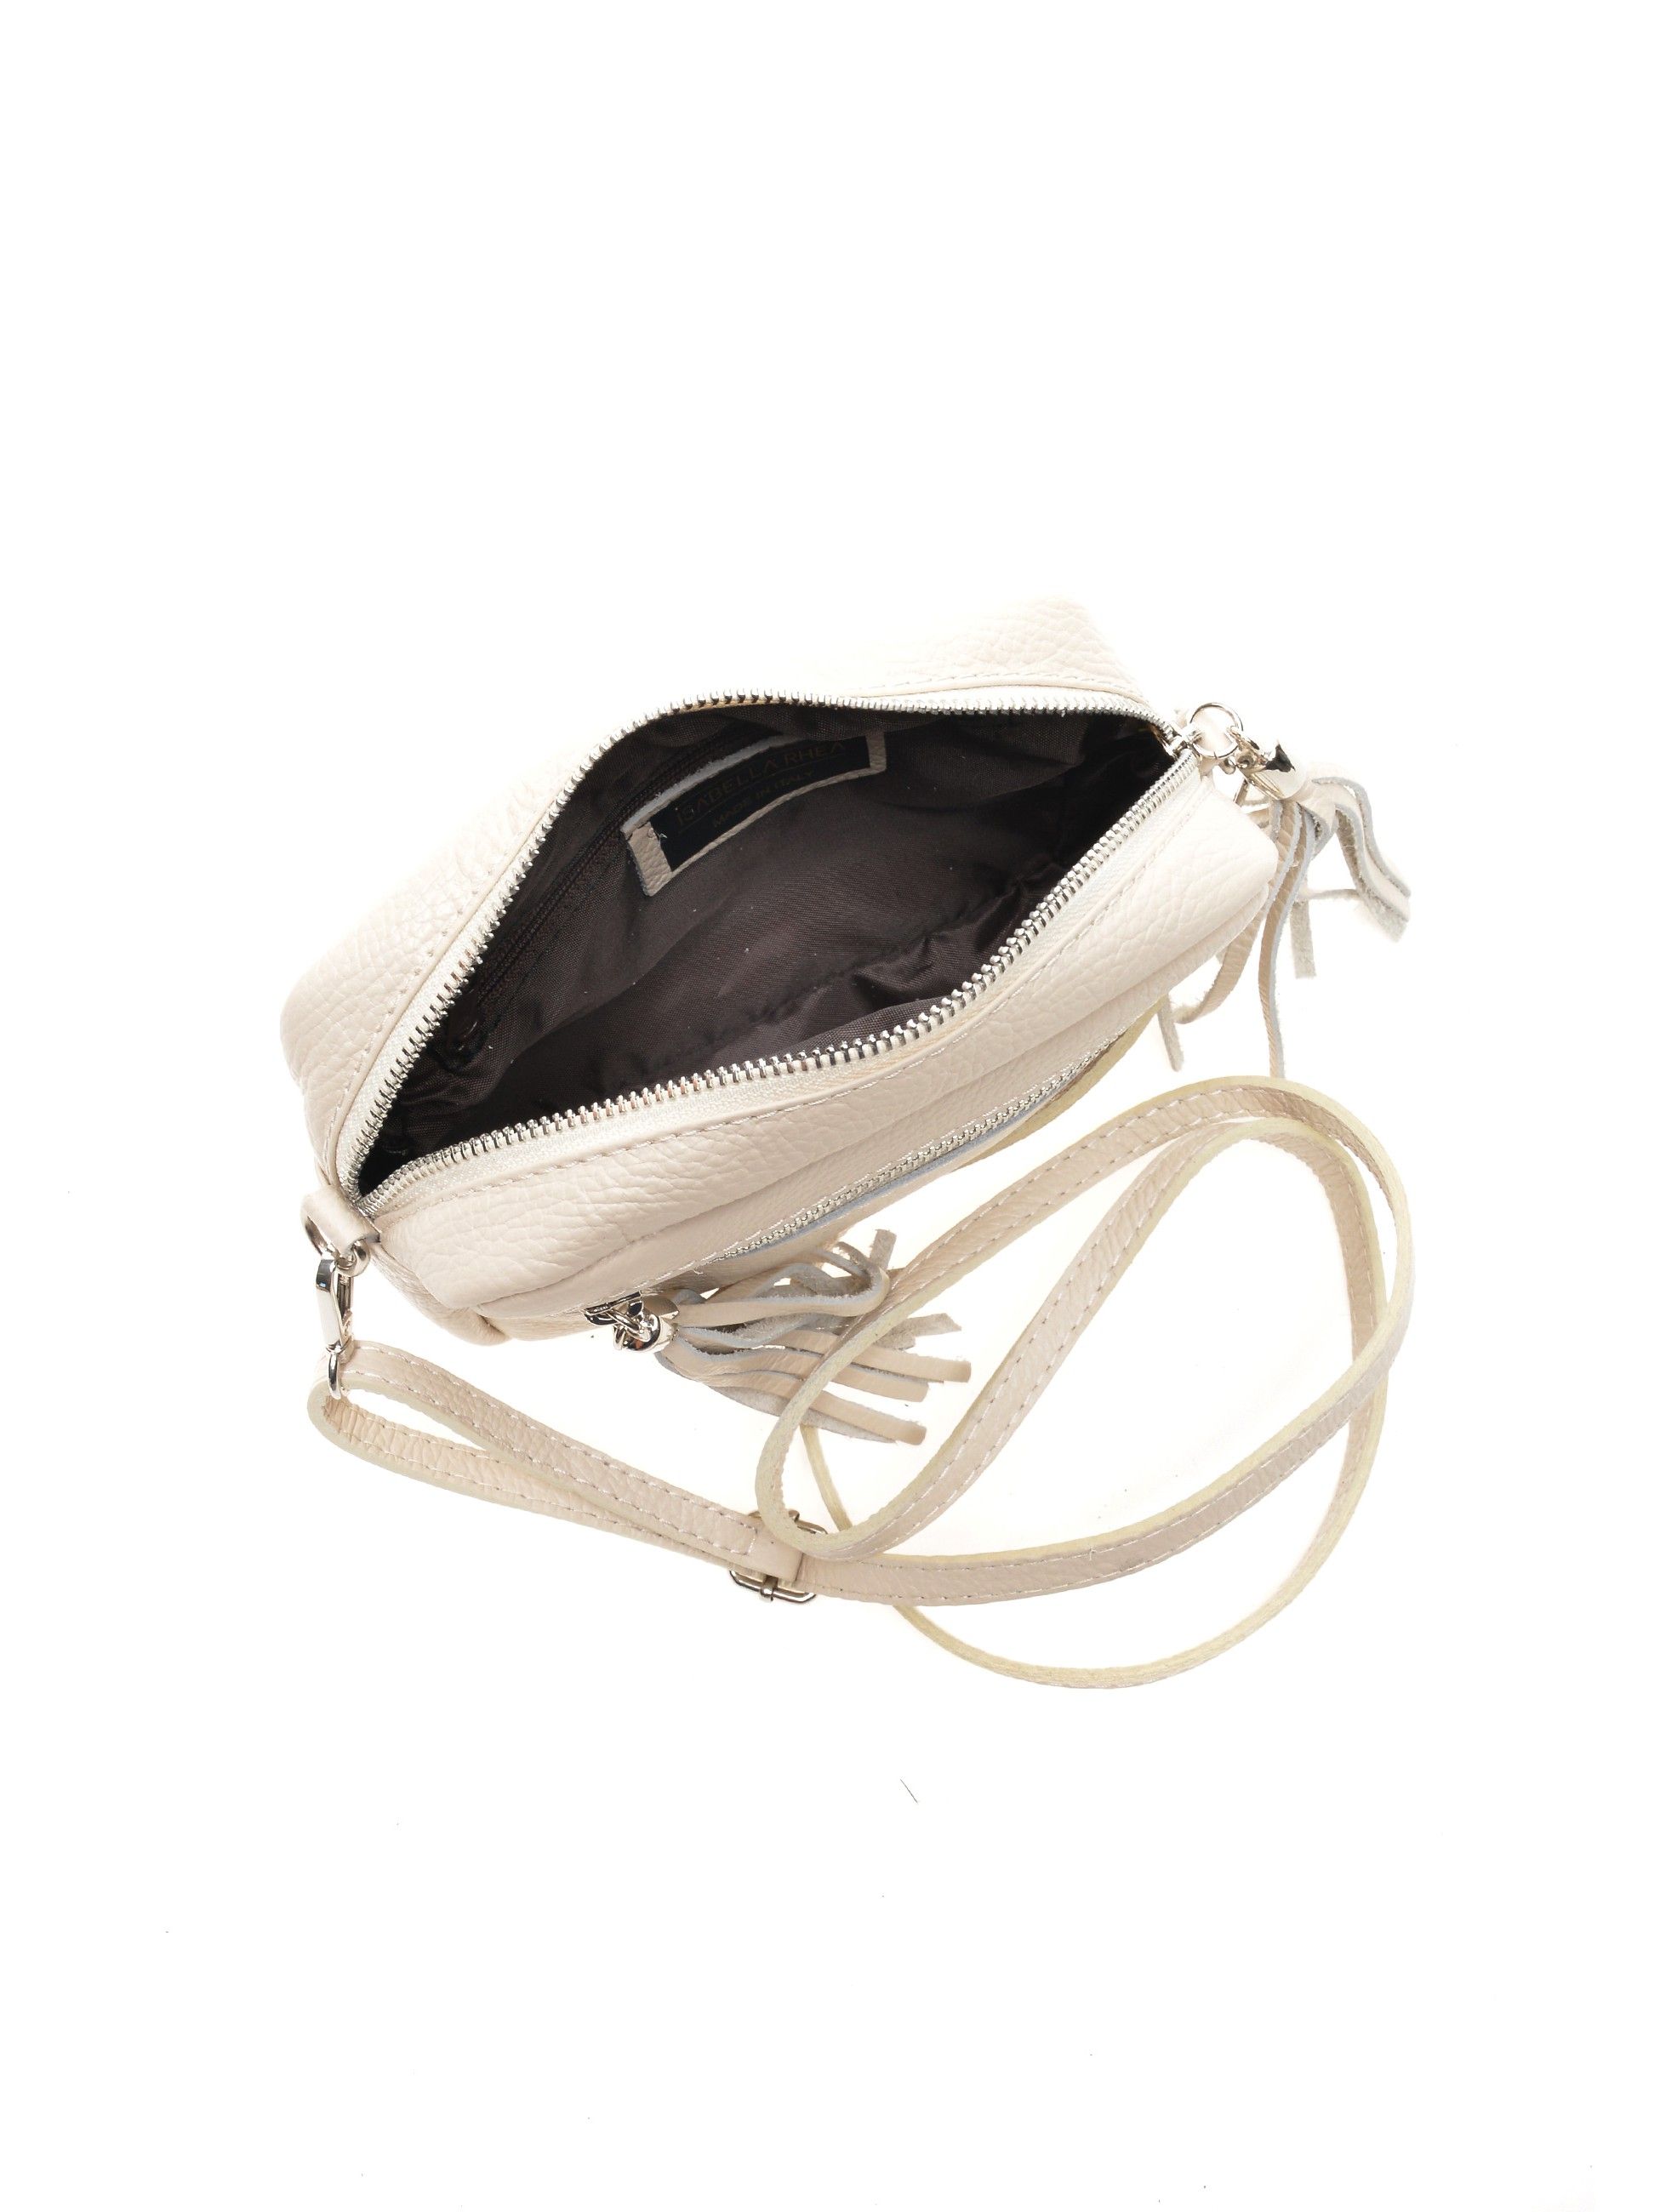 Shoulder Bag
100% cow leather
Top zip closure 
Front pocket with tassel accent
Front bow design
Handle: /
Shoulder strap: 120 cm
Dimensions (L): 14x20x5 cm